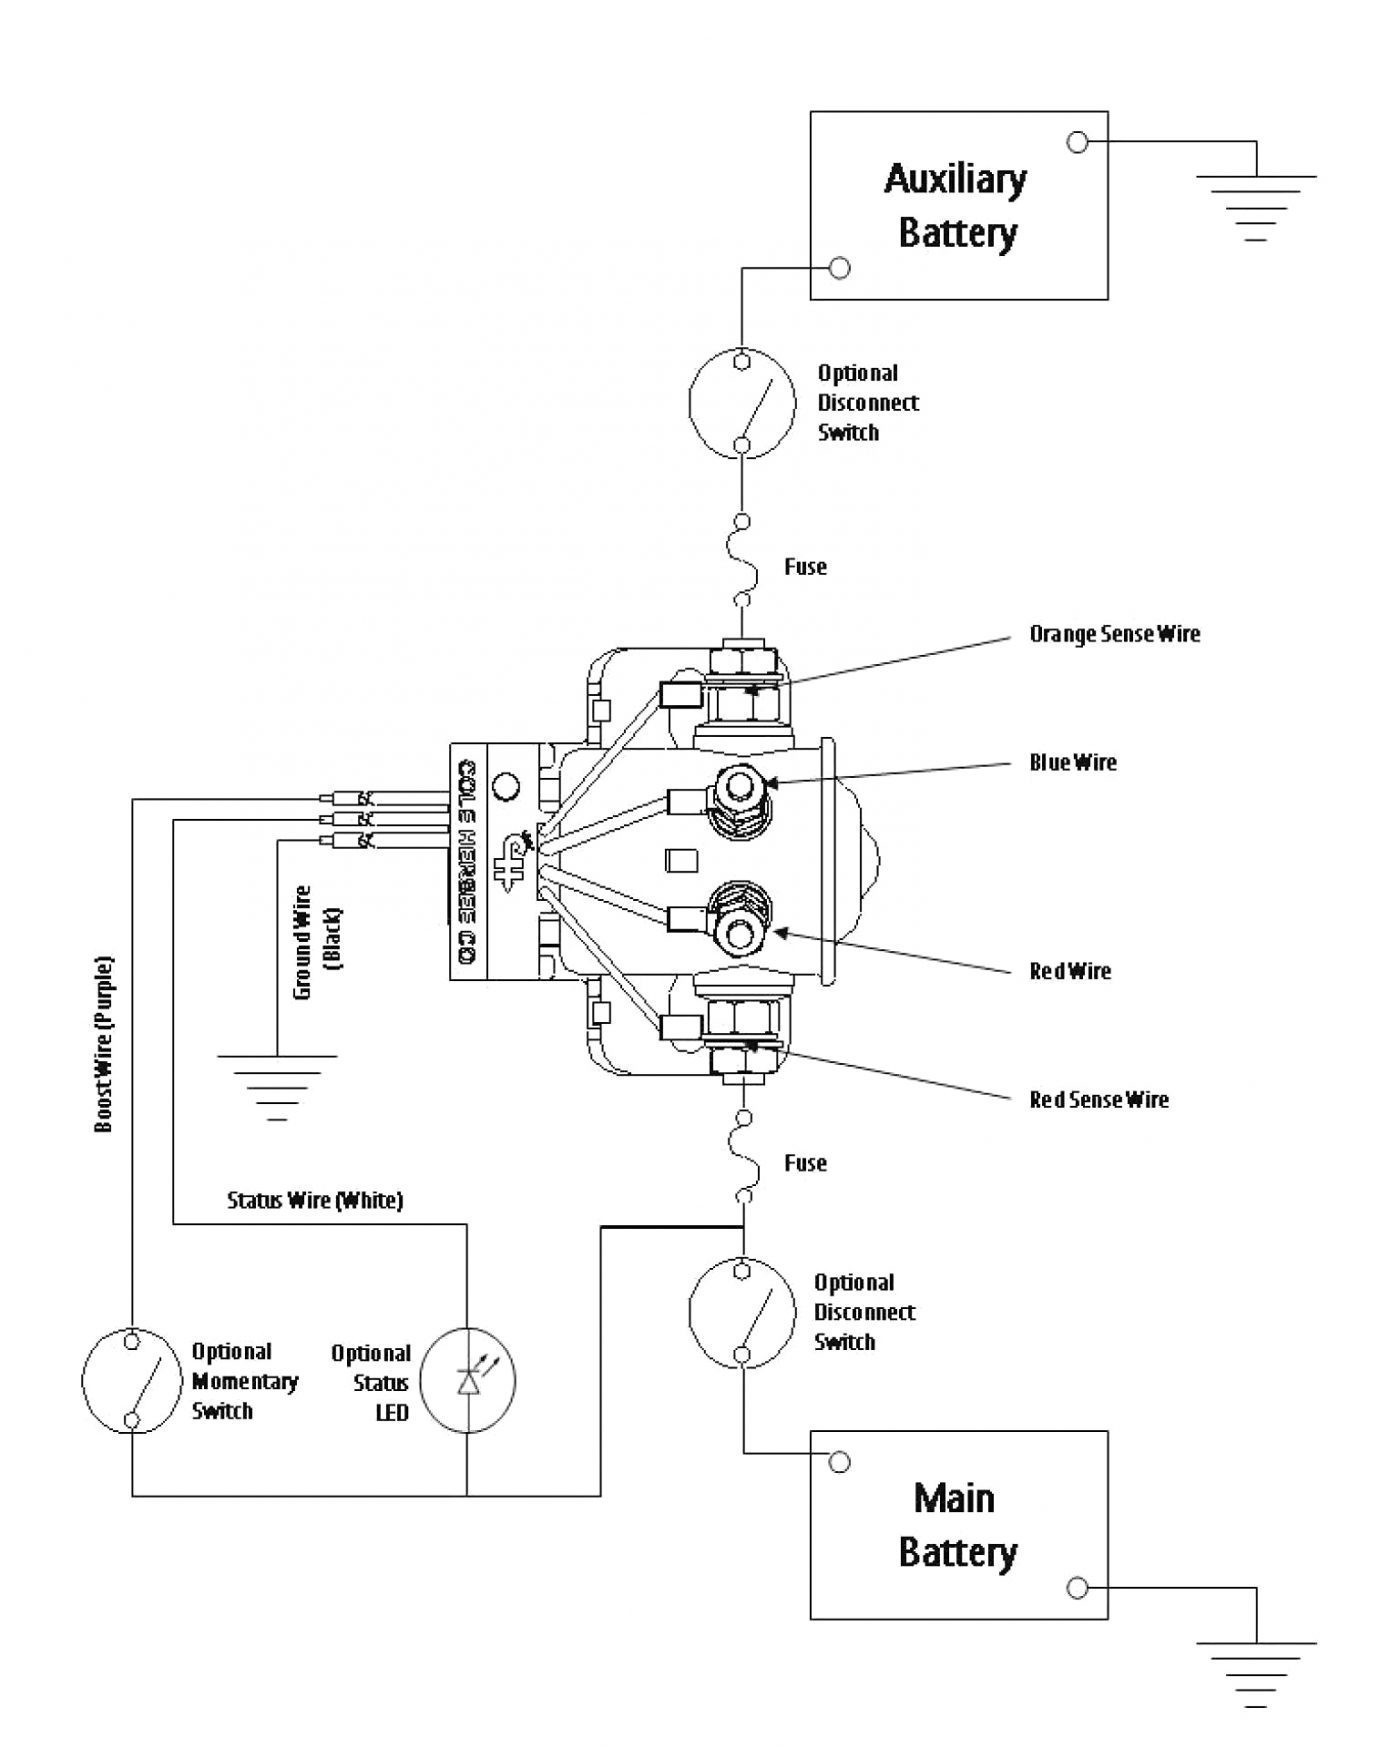 Static Inverter Wiring Diagram New Rv Battery Switch Wiring Diagram Wiring Diagram Library •